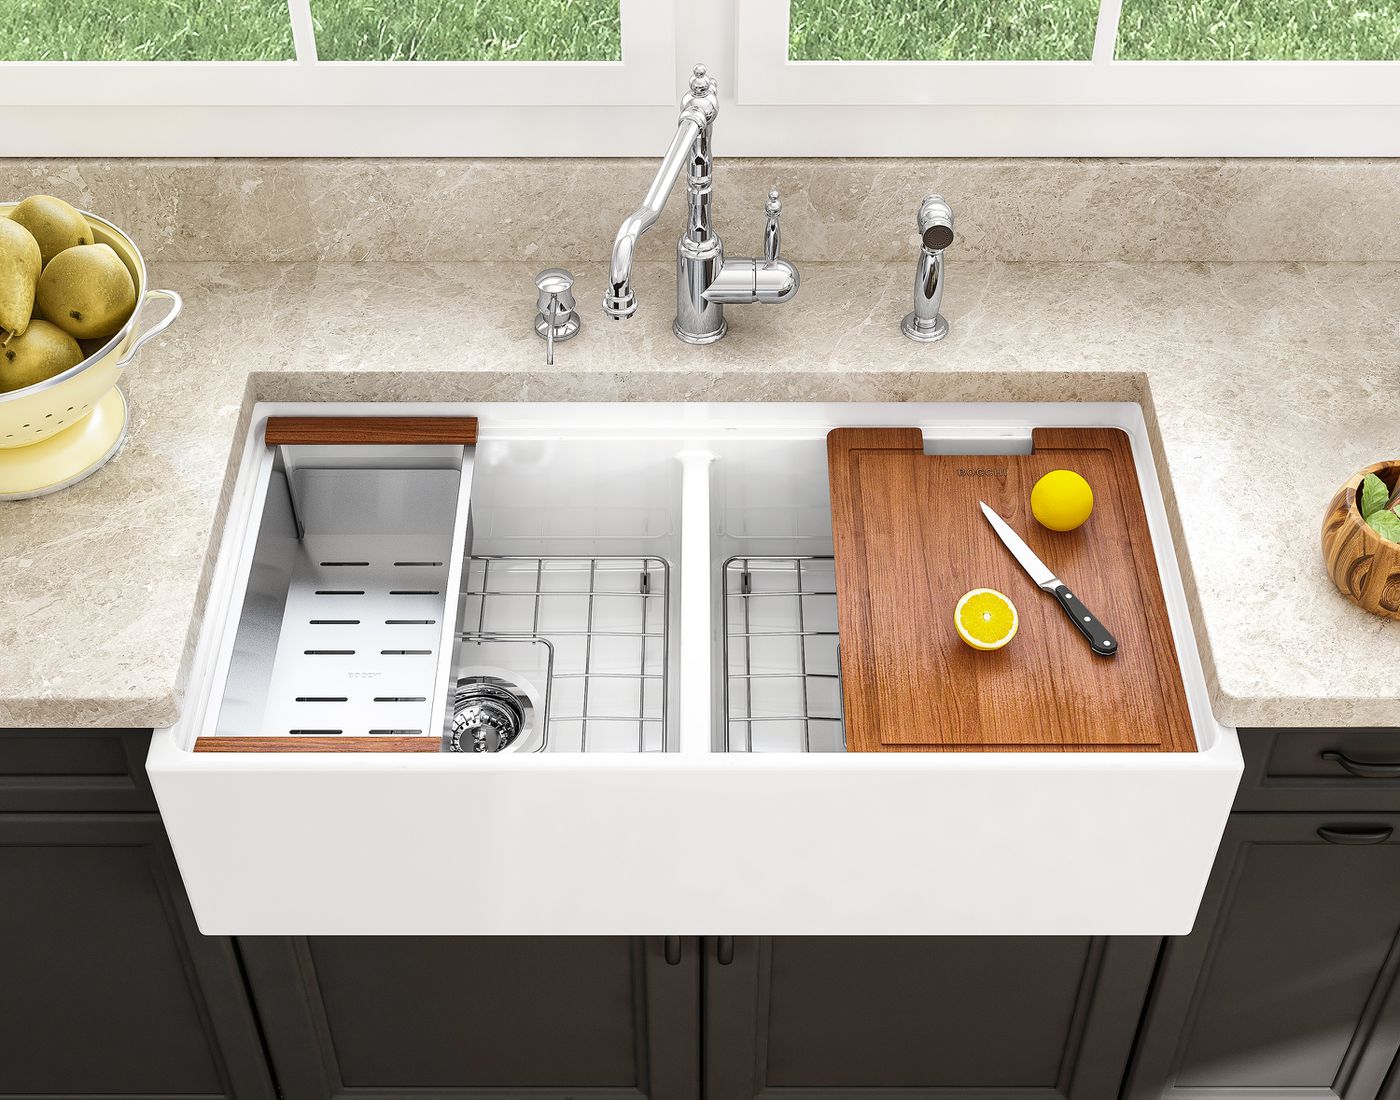 Popular Kitchen Sink Options, undermount sinks, top mount sinks, solid surface sinks, and composite kitchen sinks